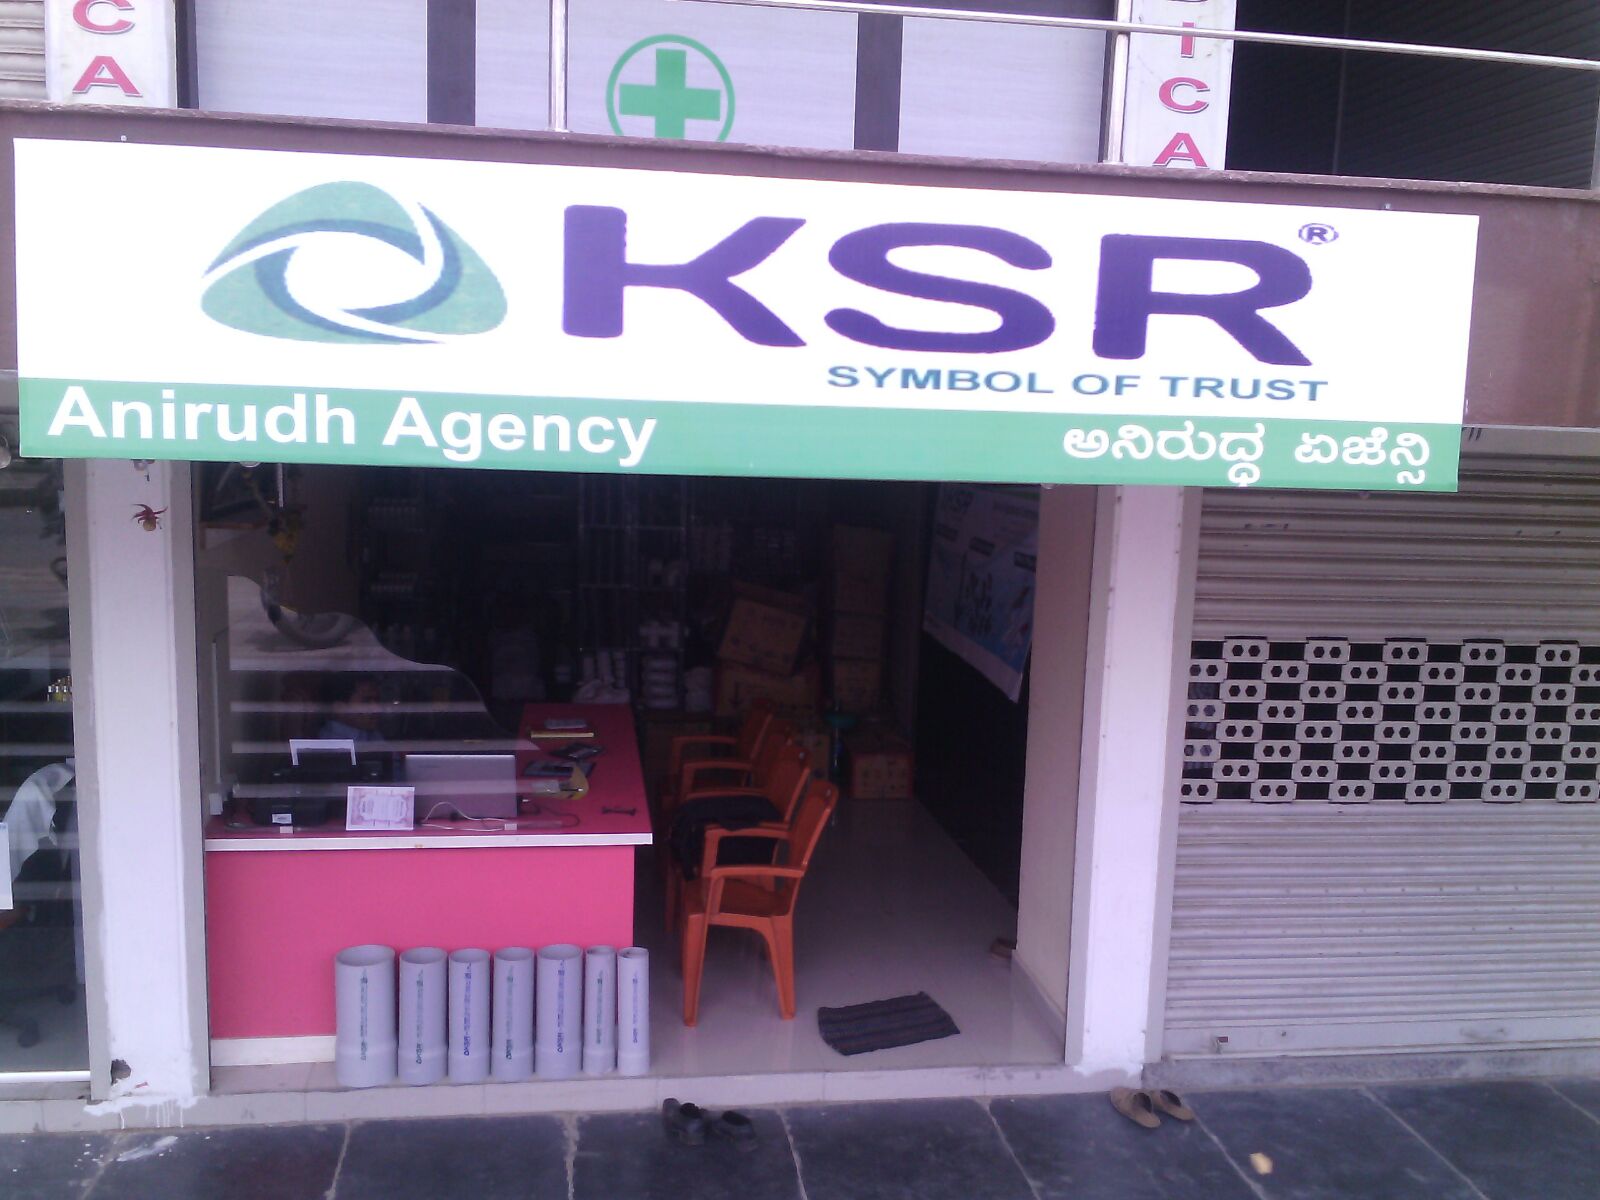 Anirudh Agency